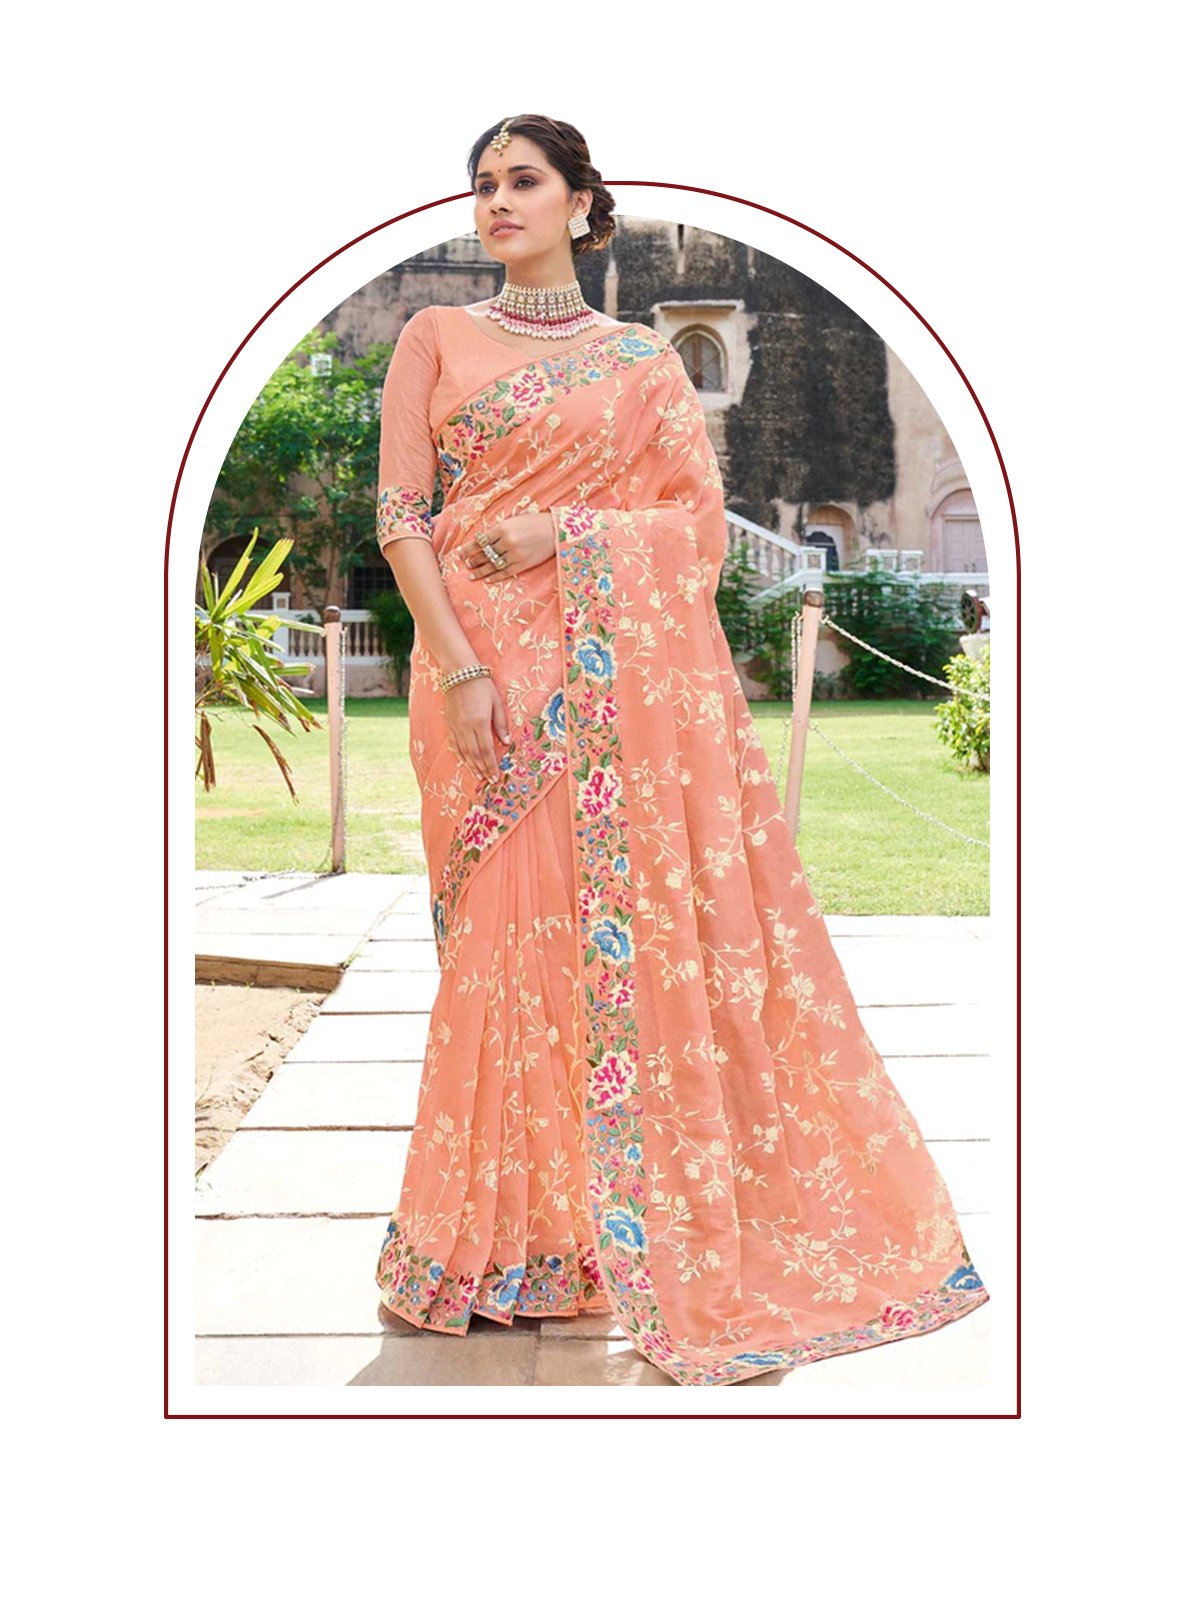 प्लस साइज महिलाओं को साड़ी पहनते समय ध्यान रखनी चाहिए ये बातें | saree  styling tips for fatty women plus size women should keep these things in  mind while wearing saree |